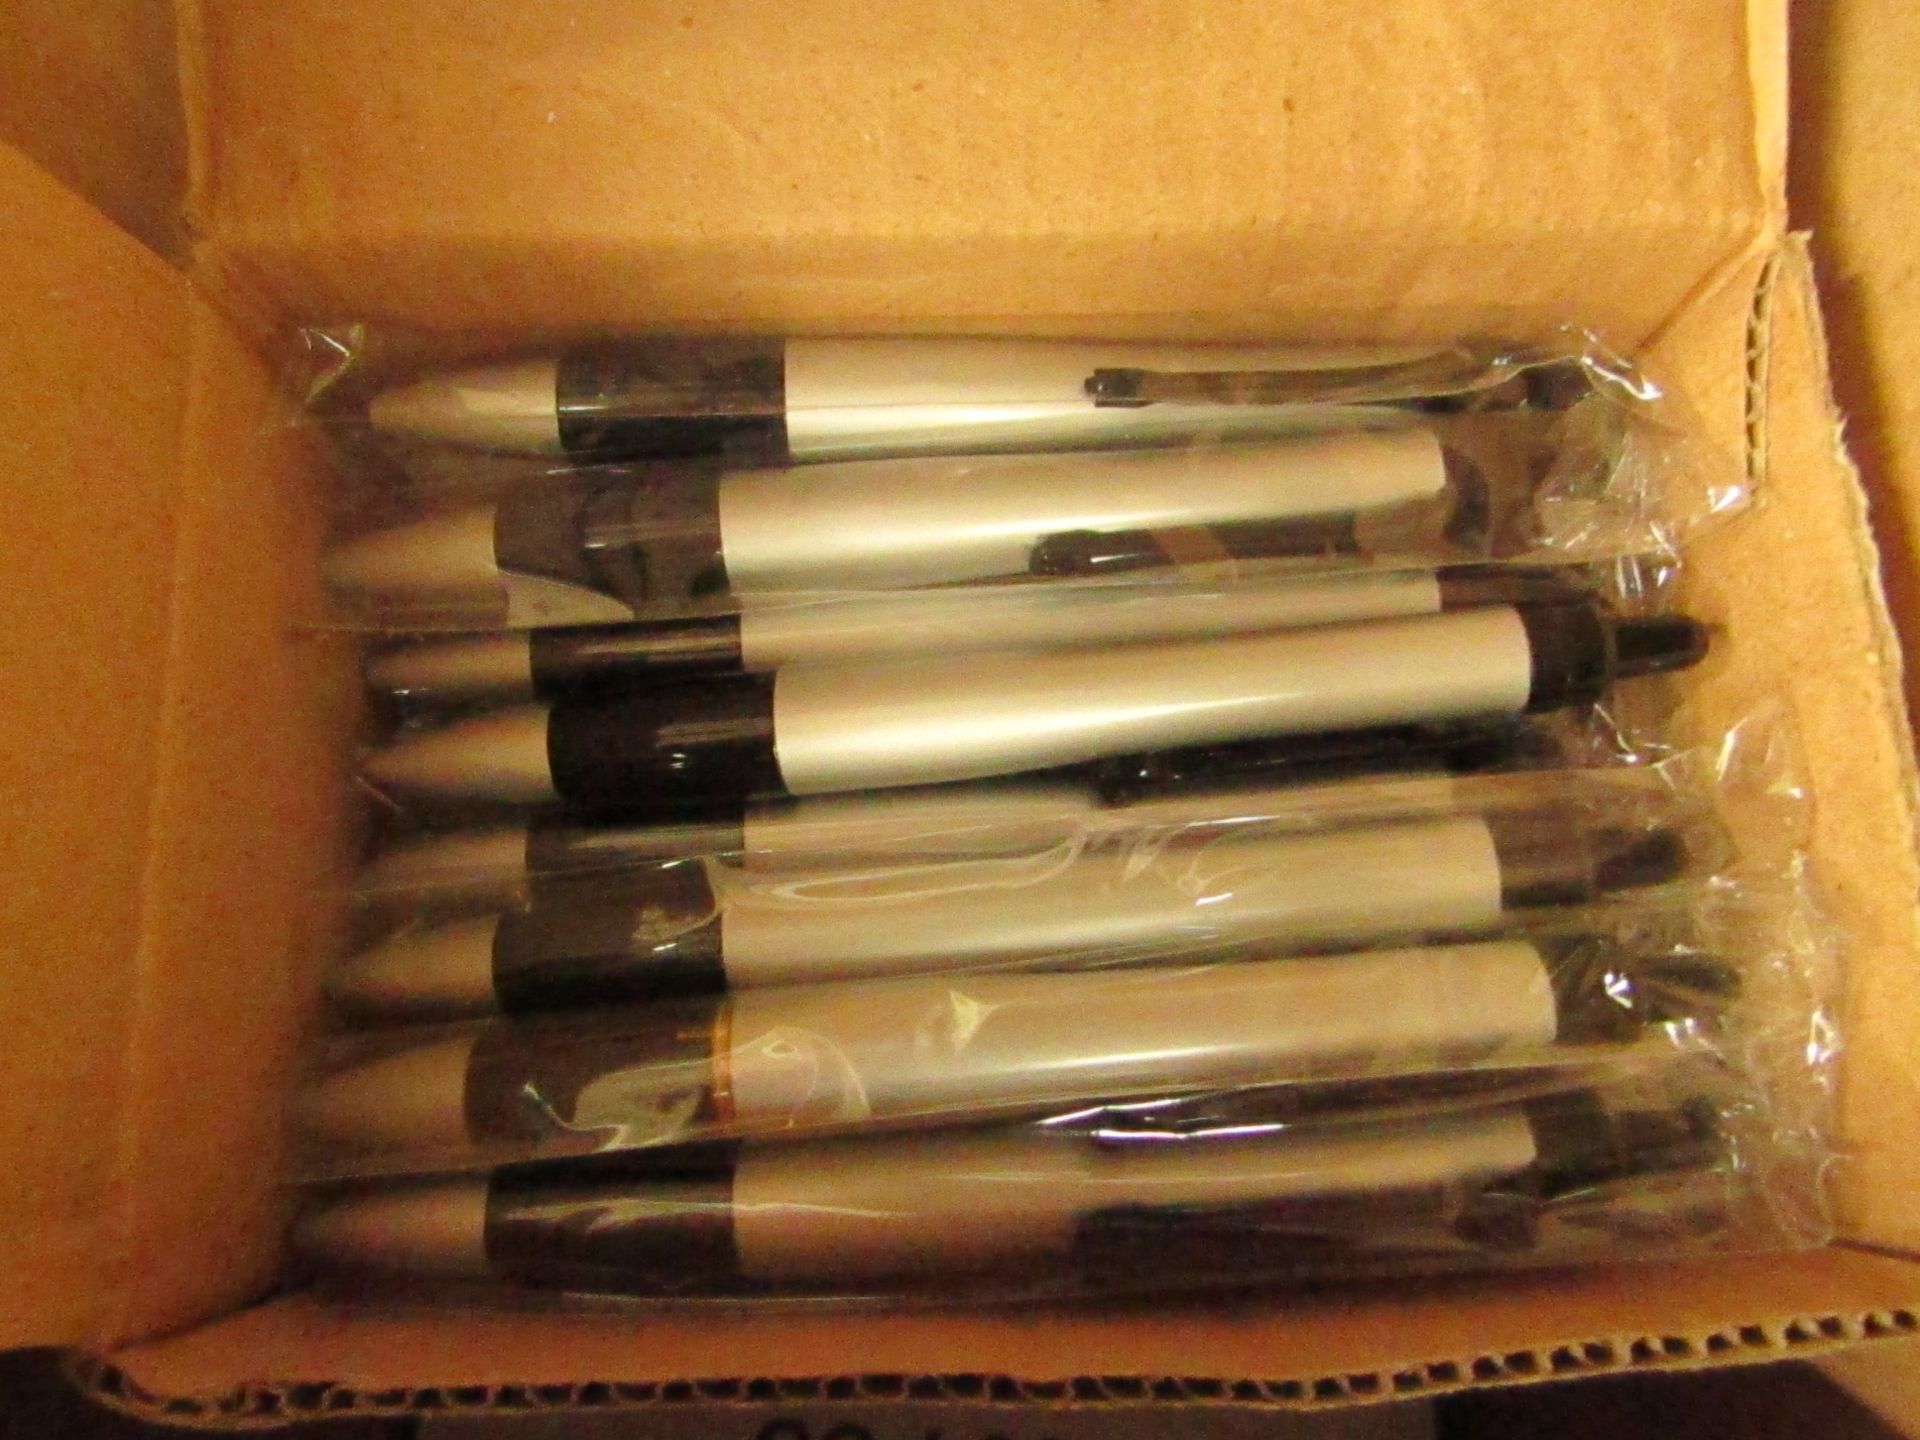 Box of 50 Black Ink Pens. See Image For Design